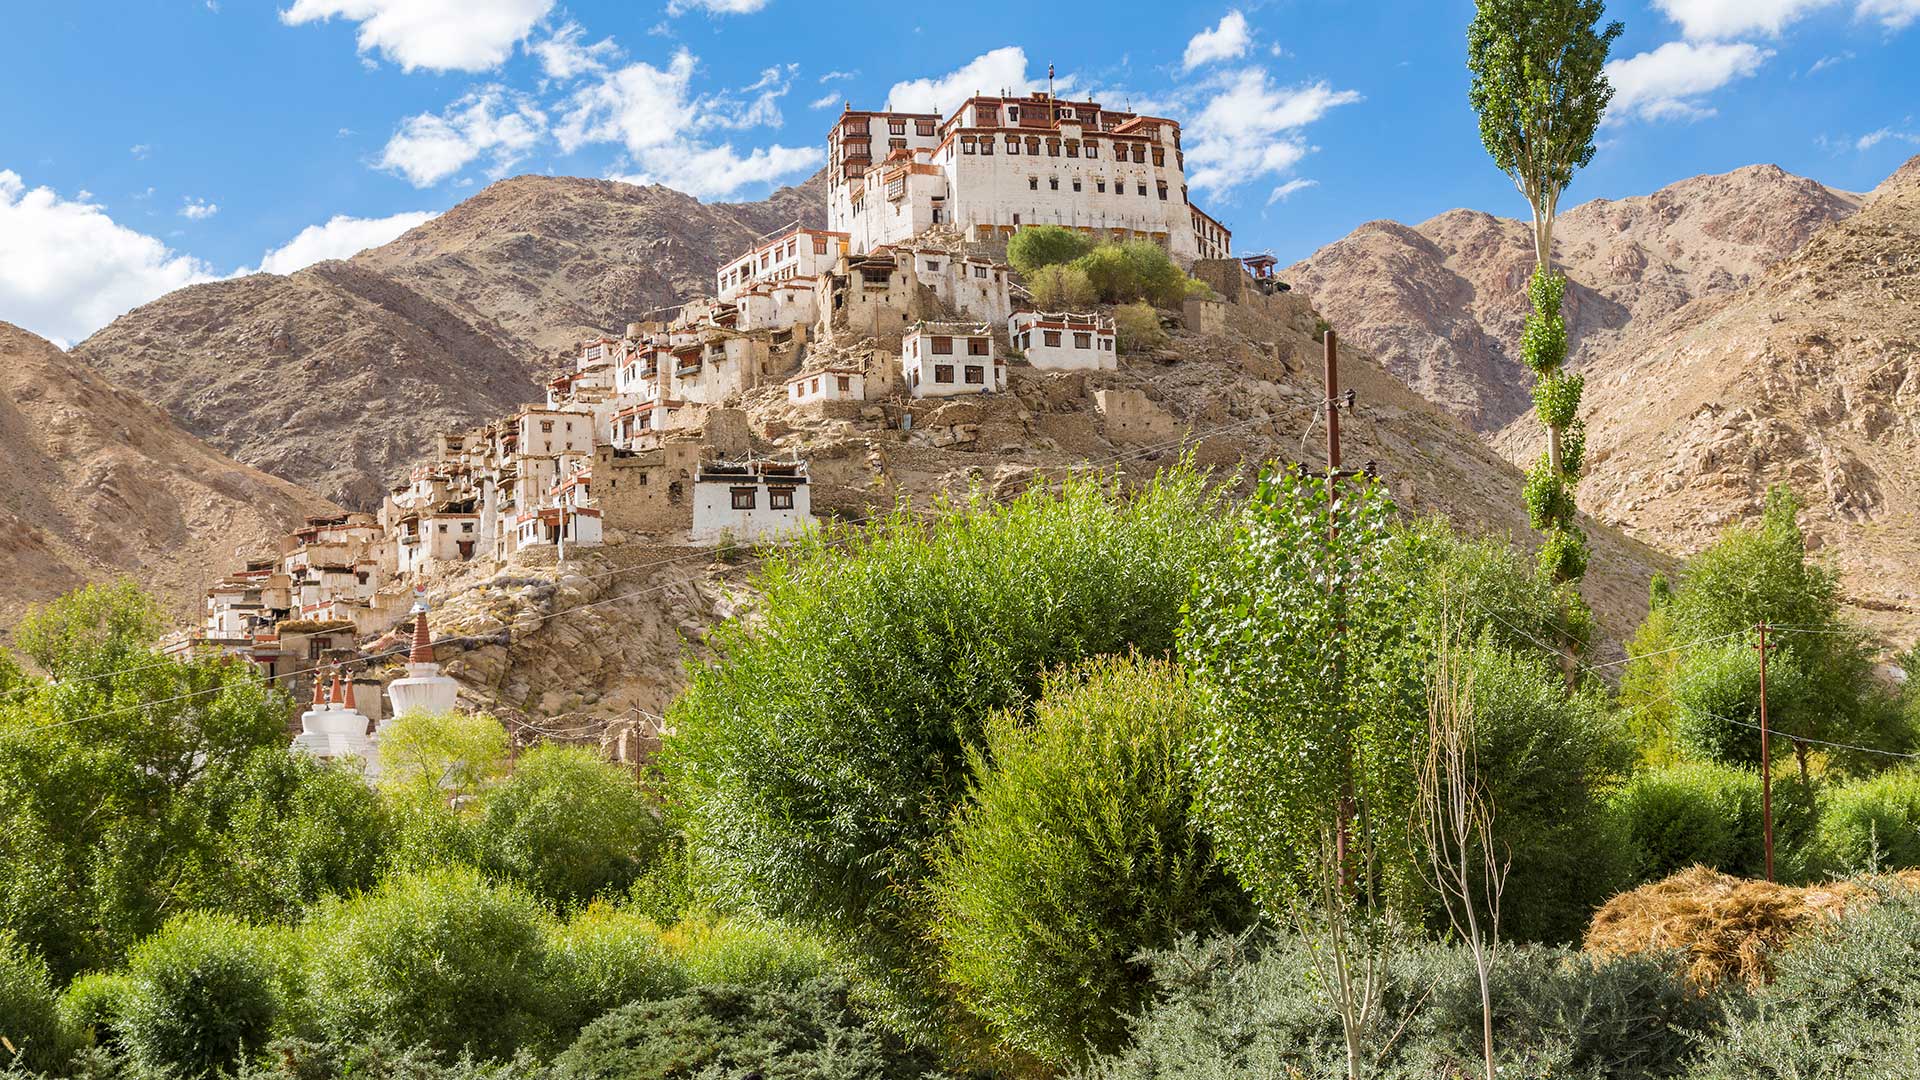 Chemrey Monastery near Leh, in the Ladakh region of India